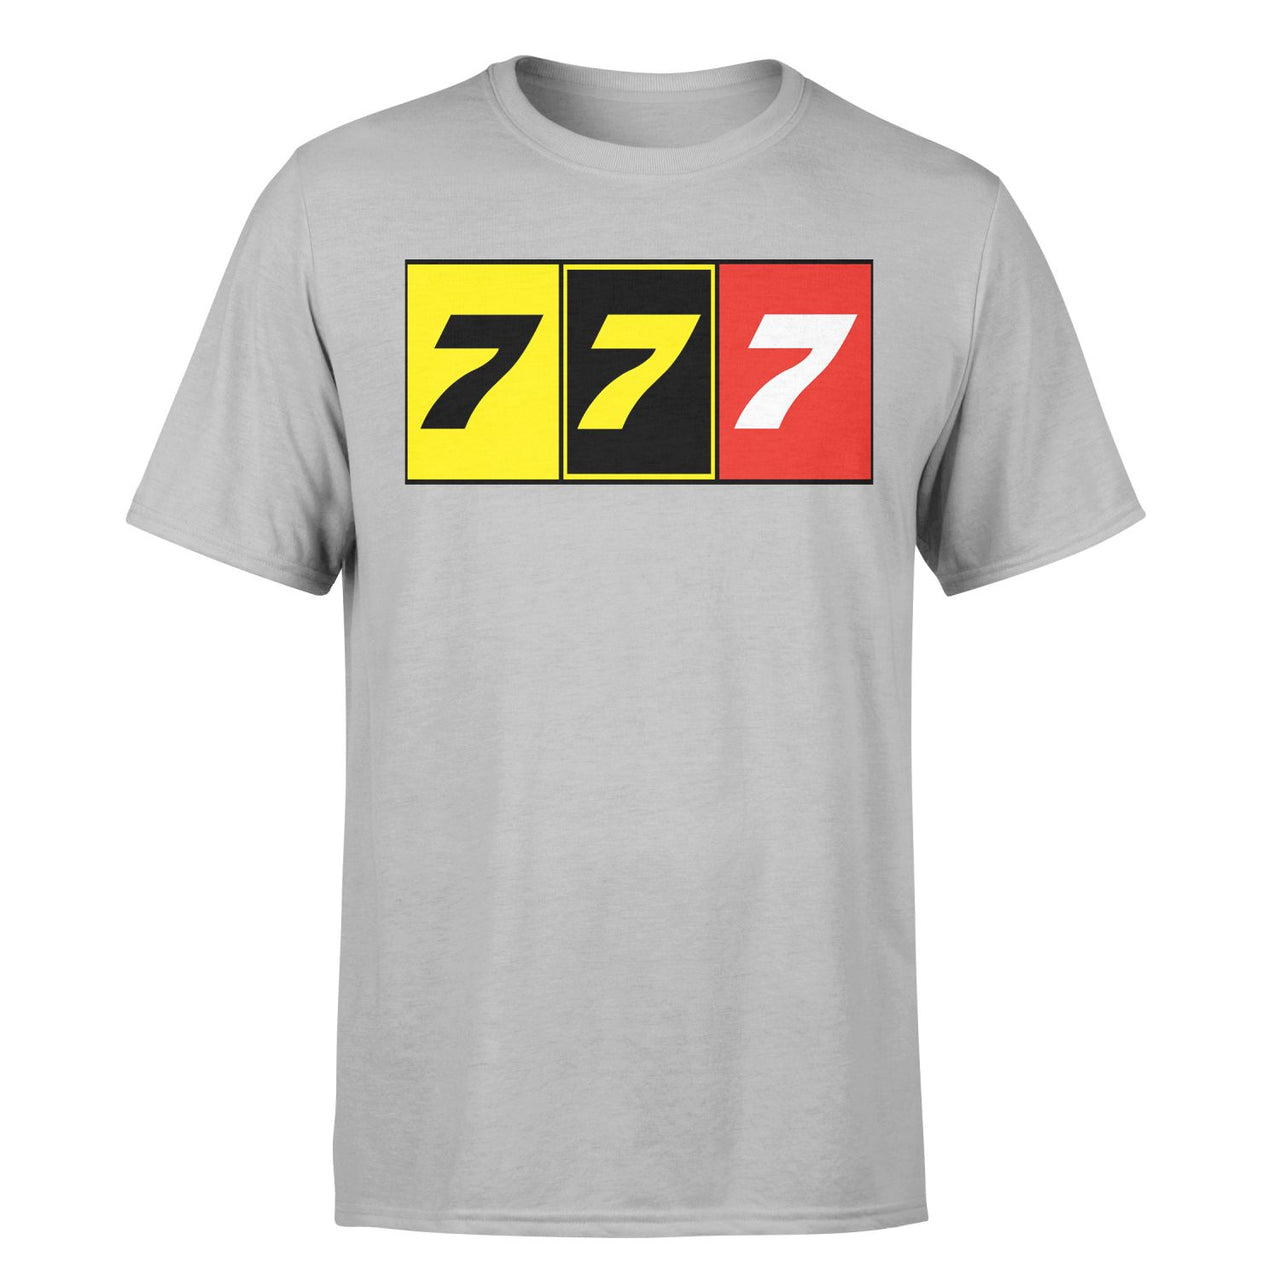 Flat Colourful 777 Designed T-Shirts